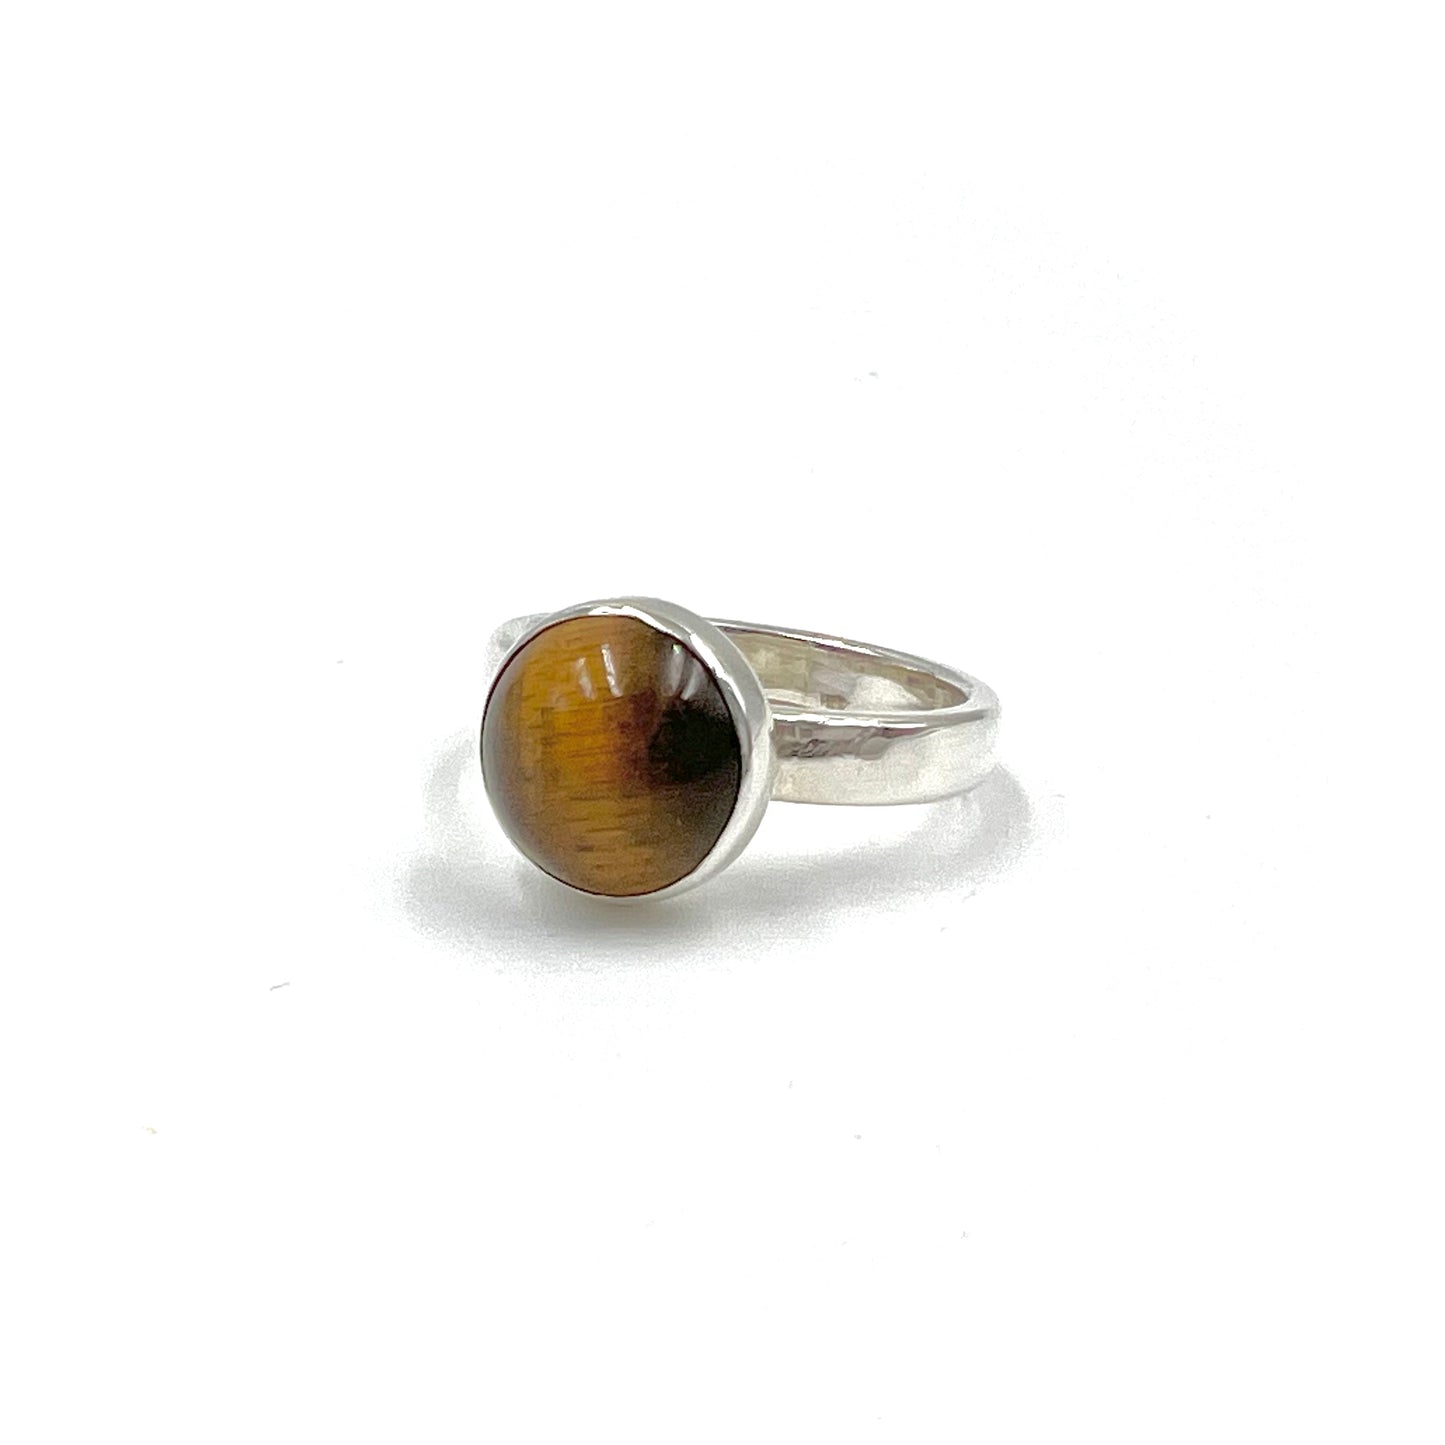 Tiger's-Eye Sterling Silver Ring, Size 6